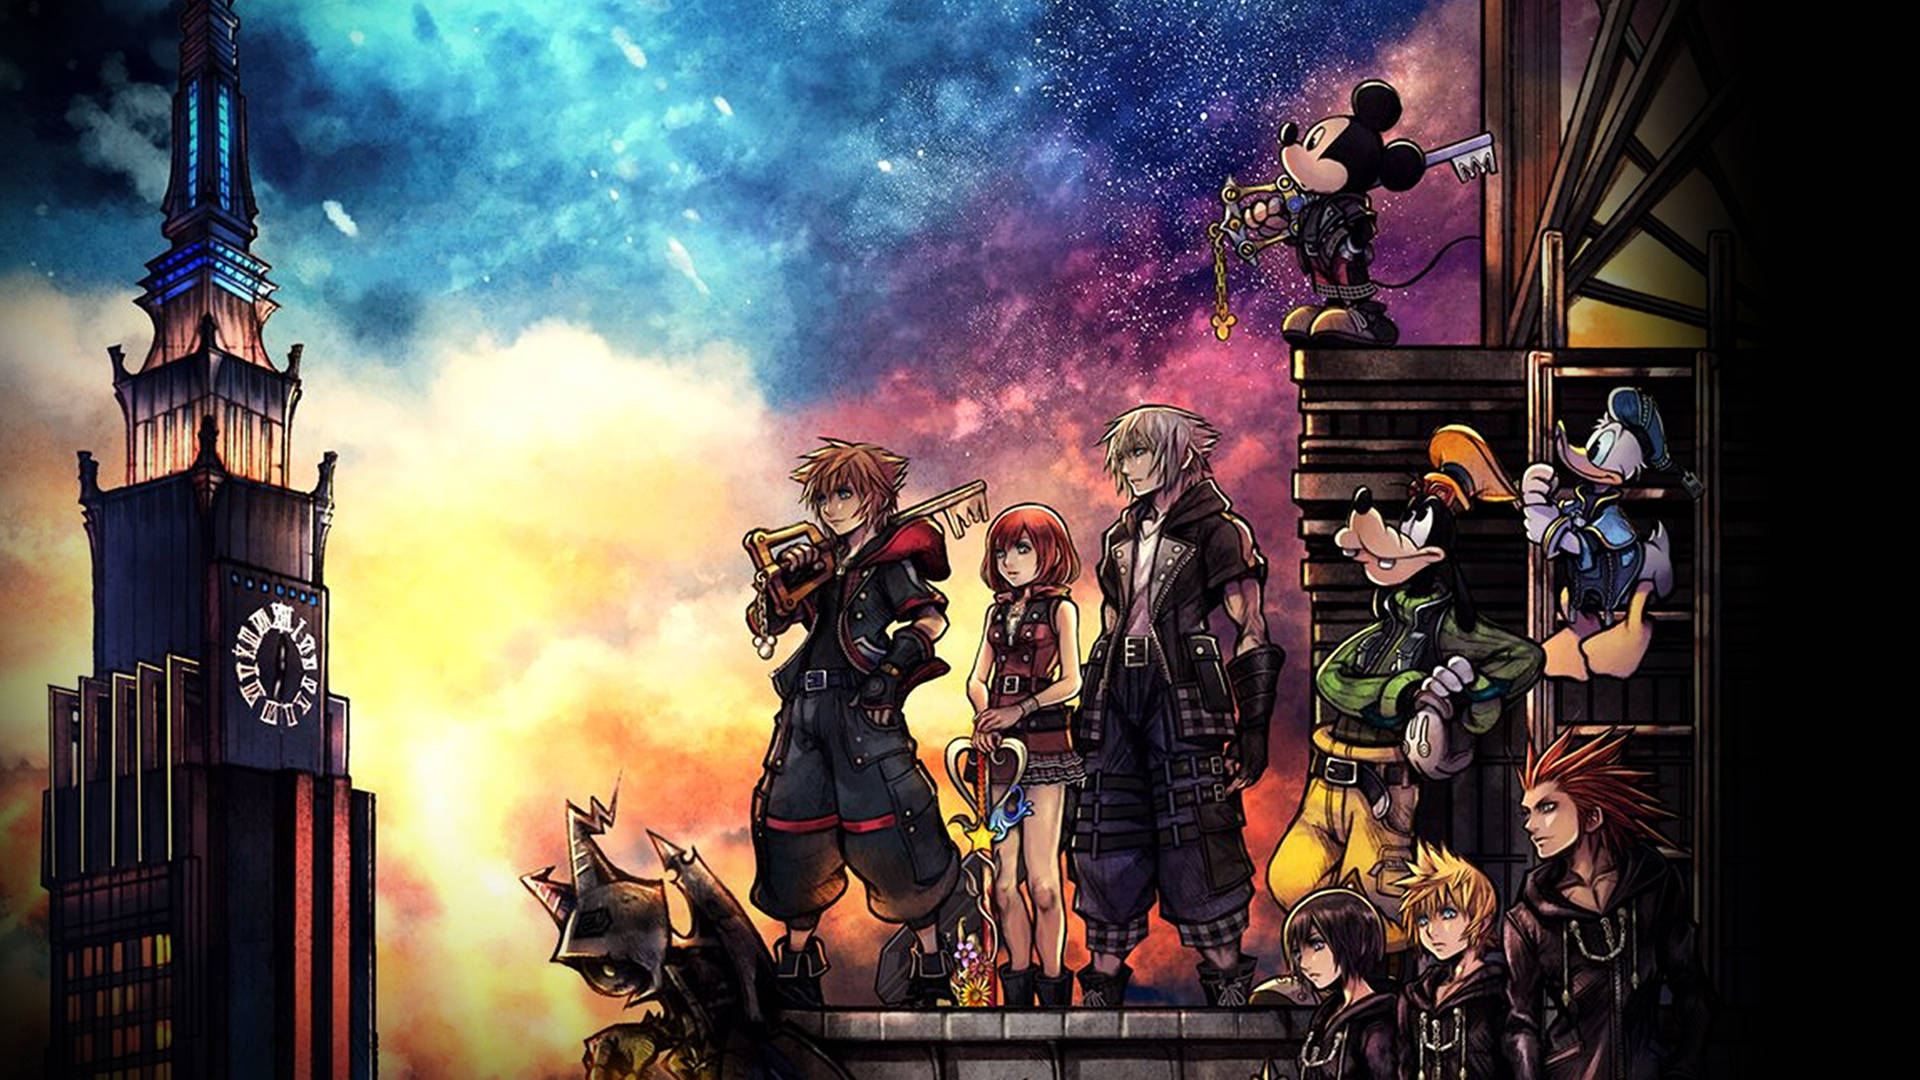 Kingdom Hearts 3 Wallpapers